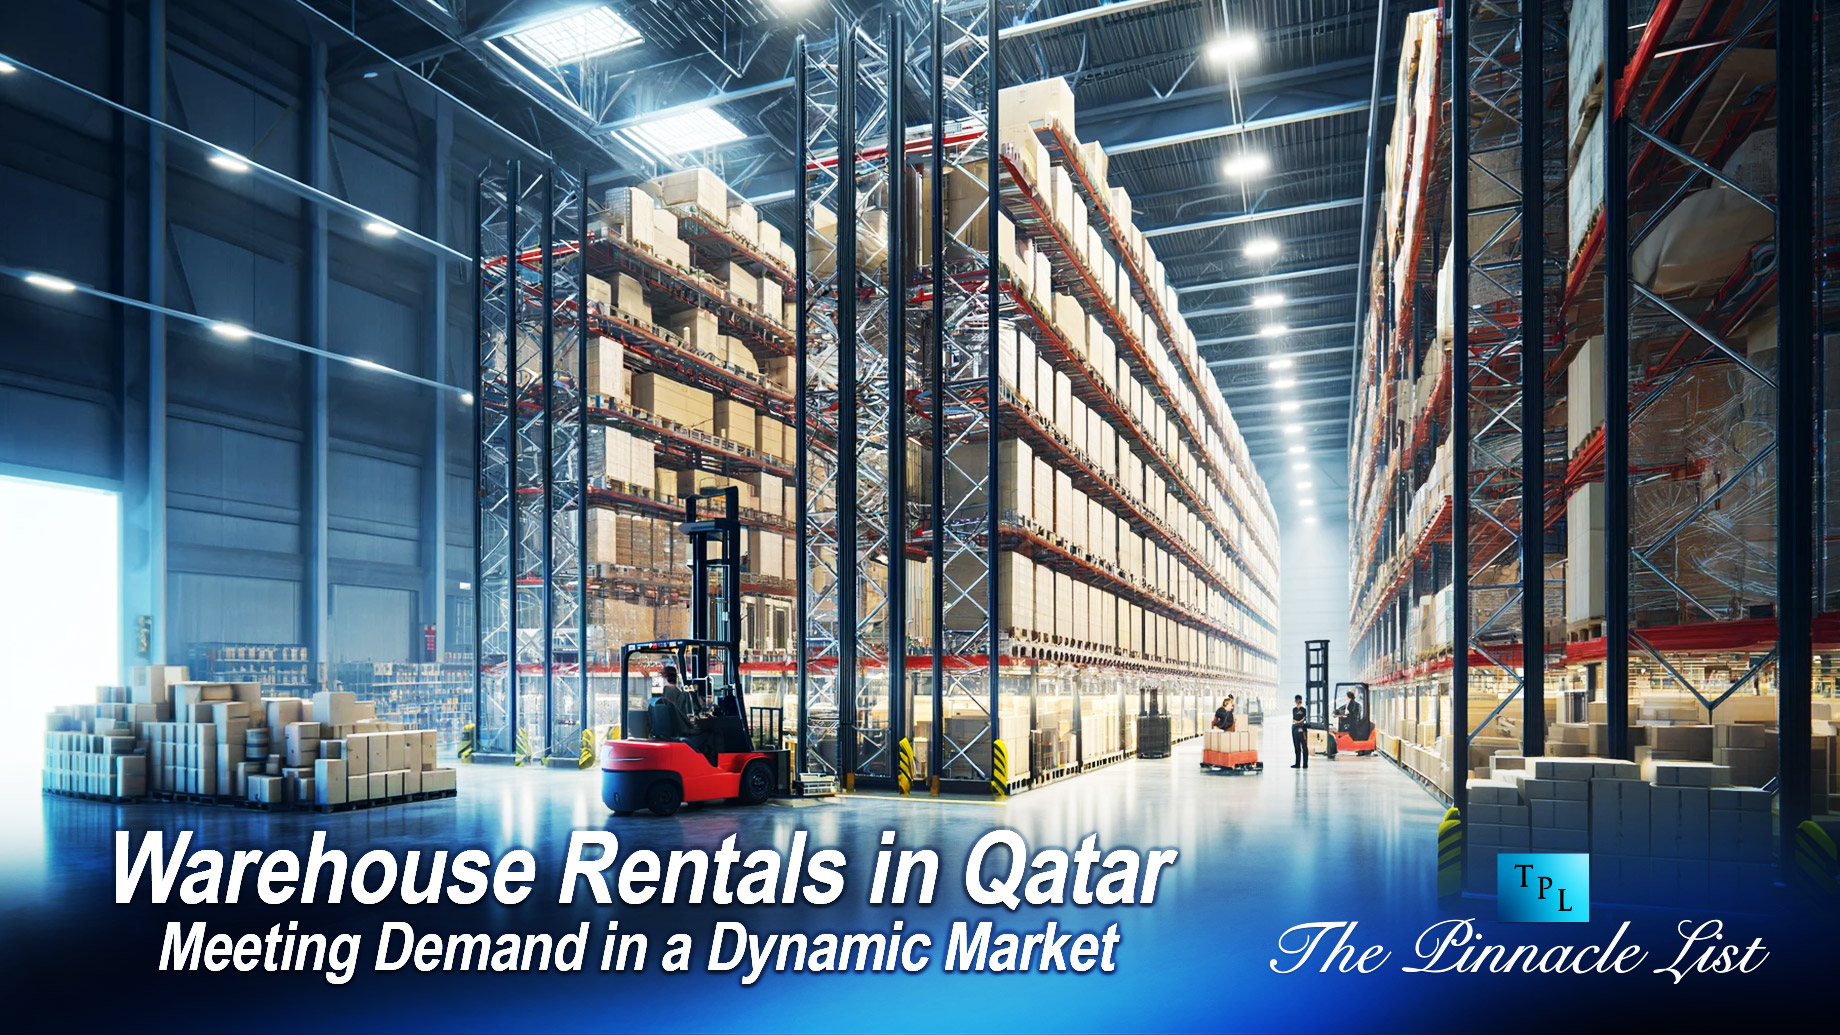 Warehouse Rentals in Qatar: Meeting Demand in a Dynamic Market